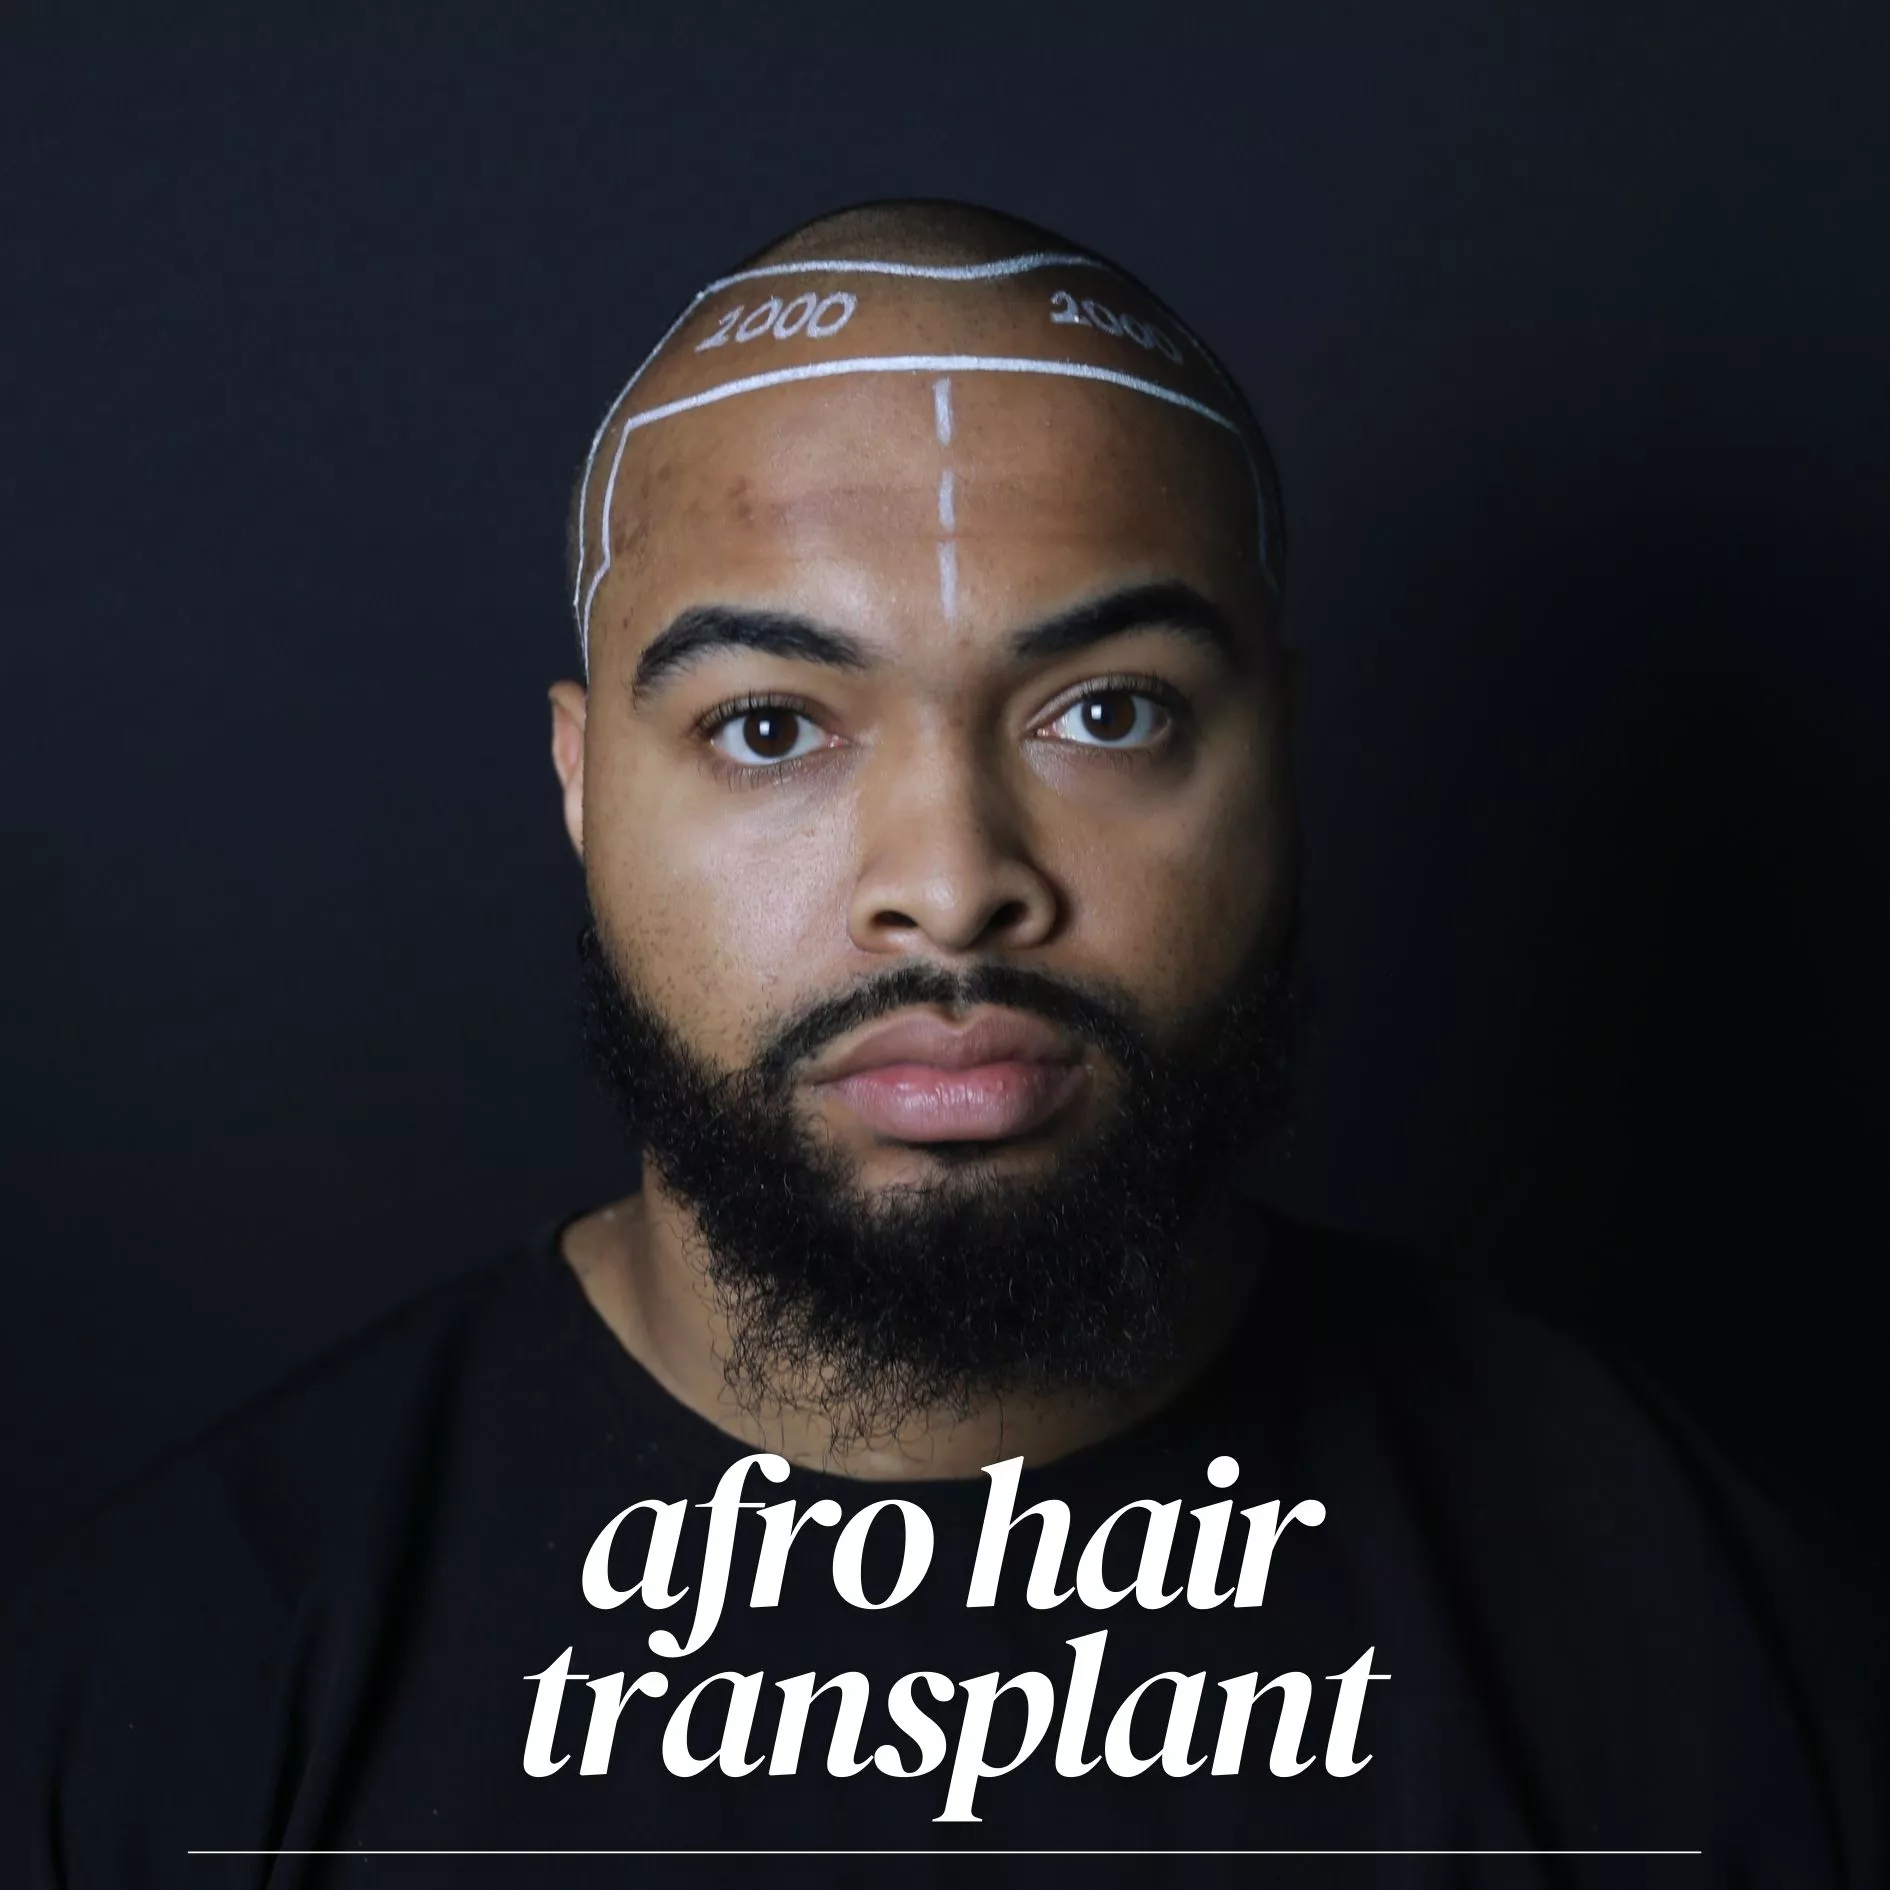 afro hair transplant